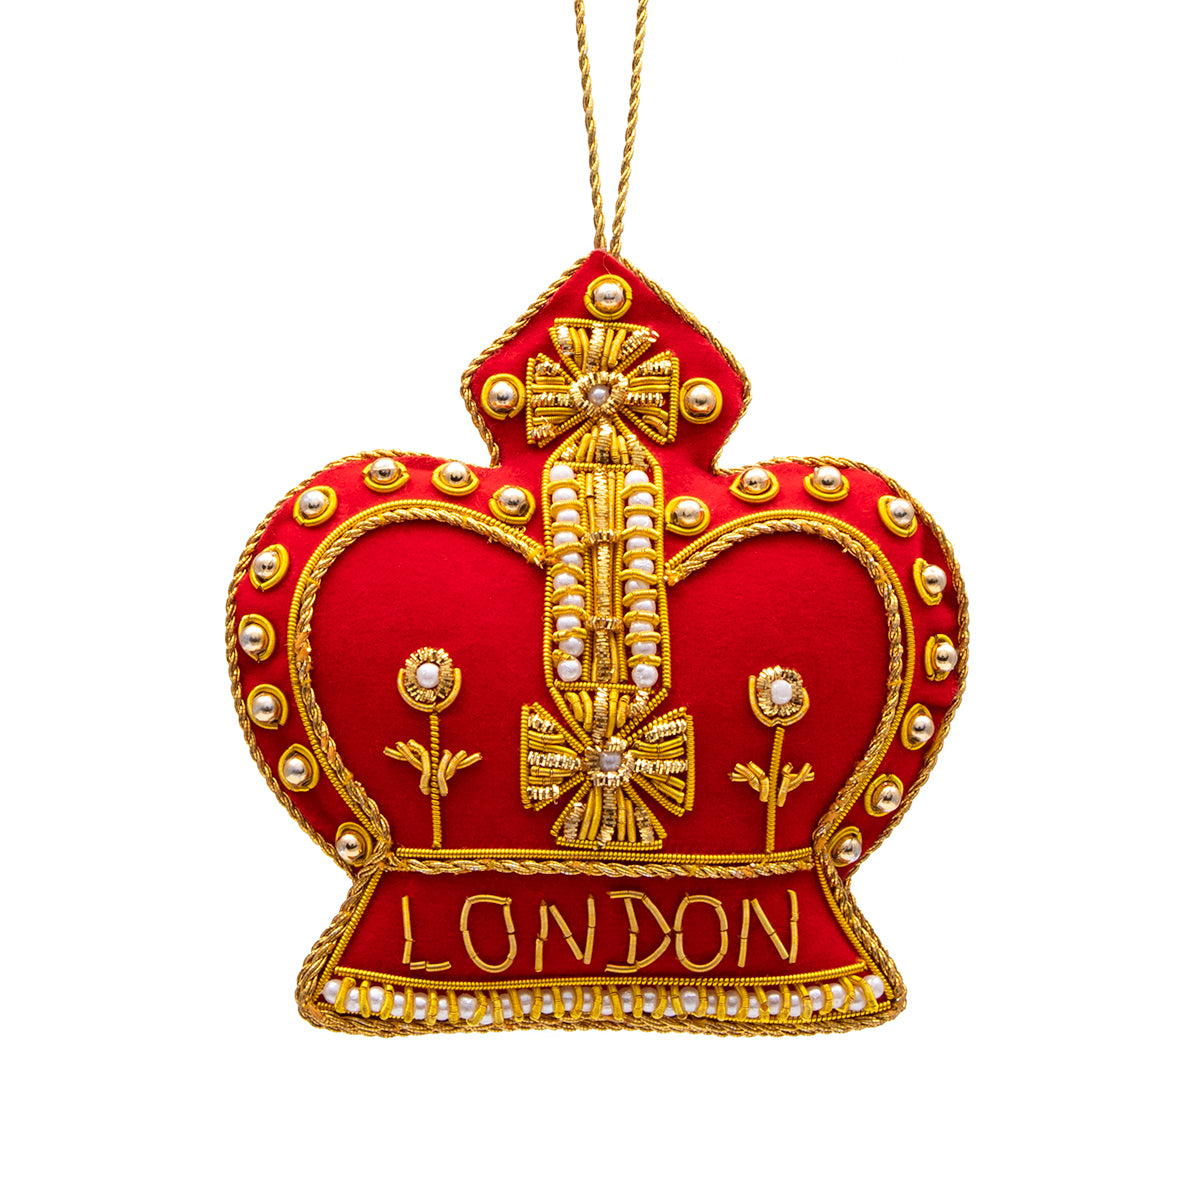 London Crown Stitched Decoration 1